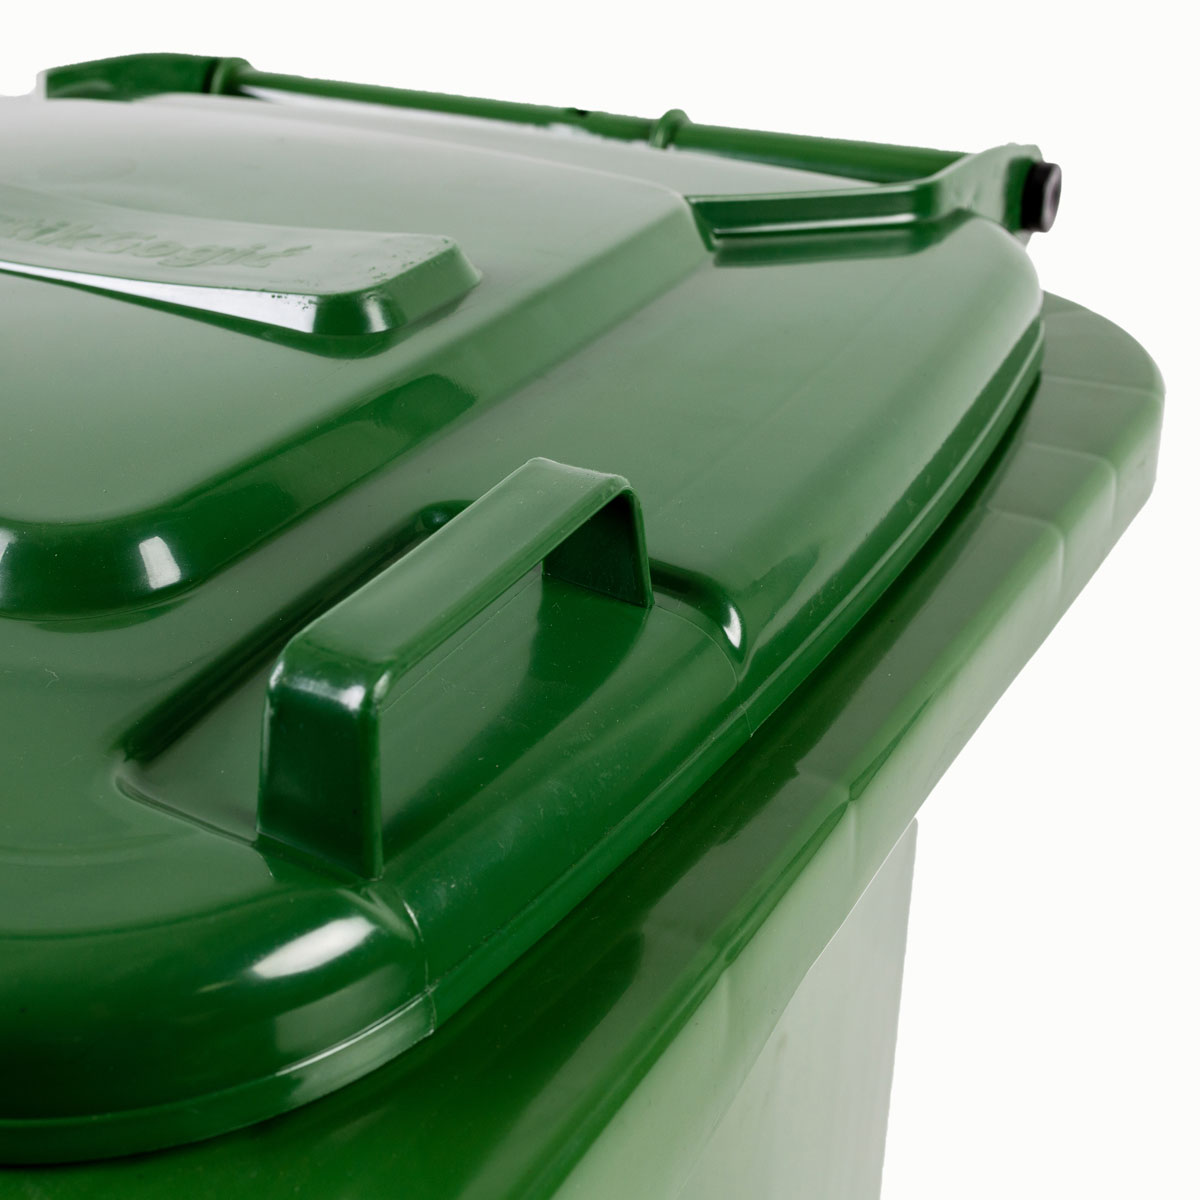 Rollabfallbehälter, aus PE-HD, grün